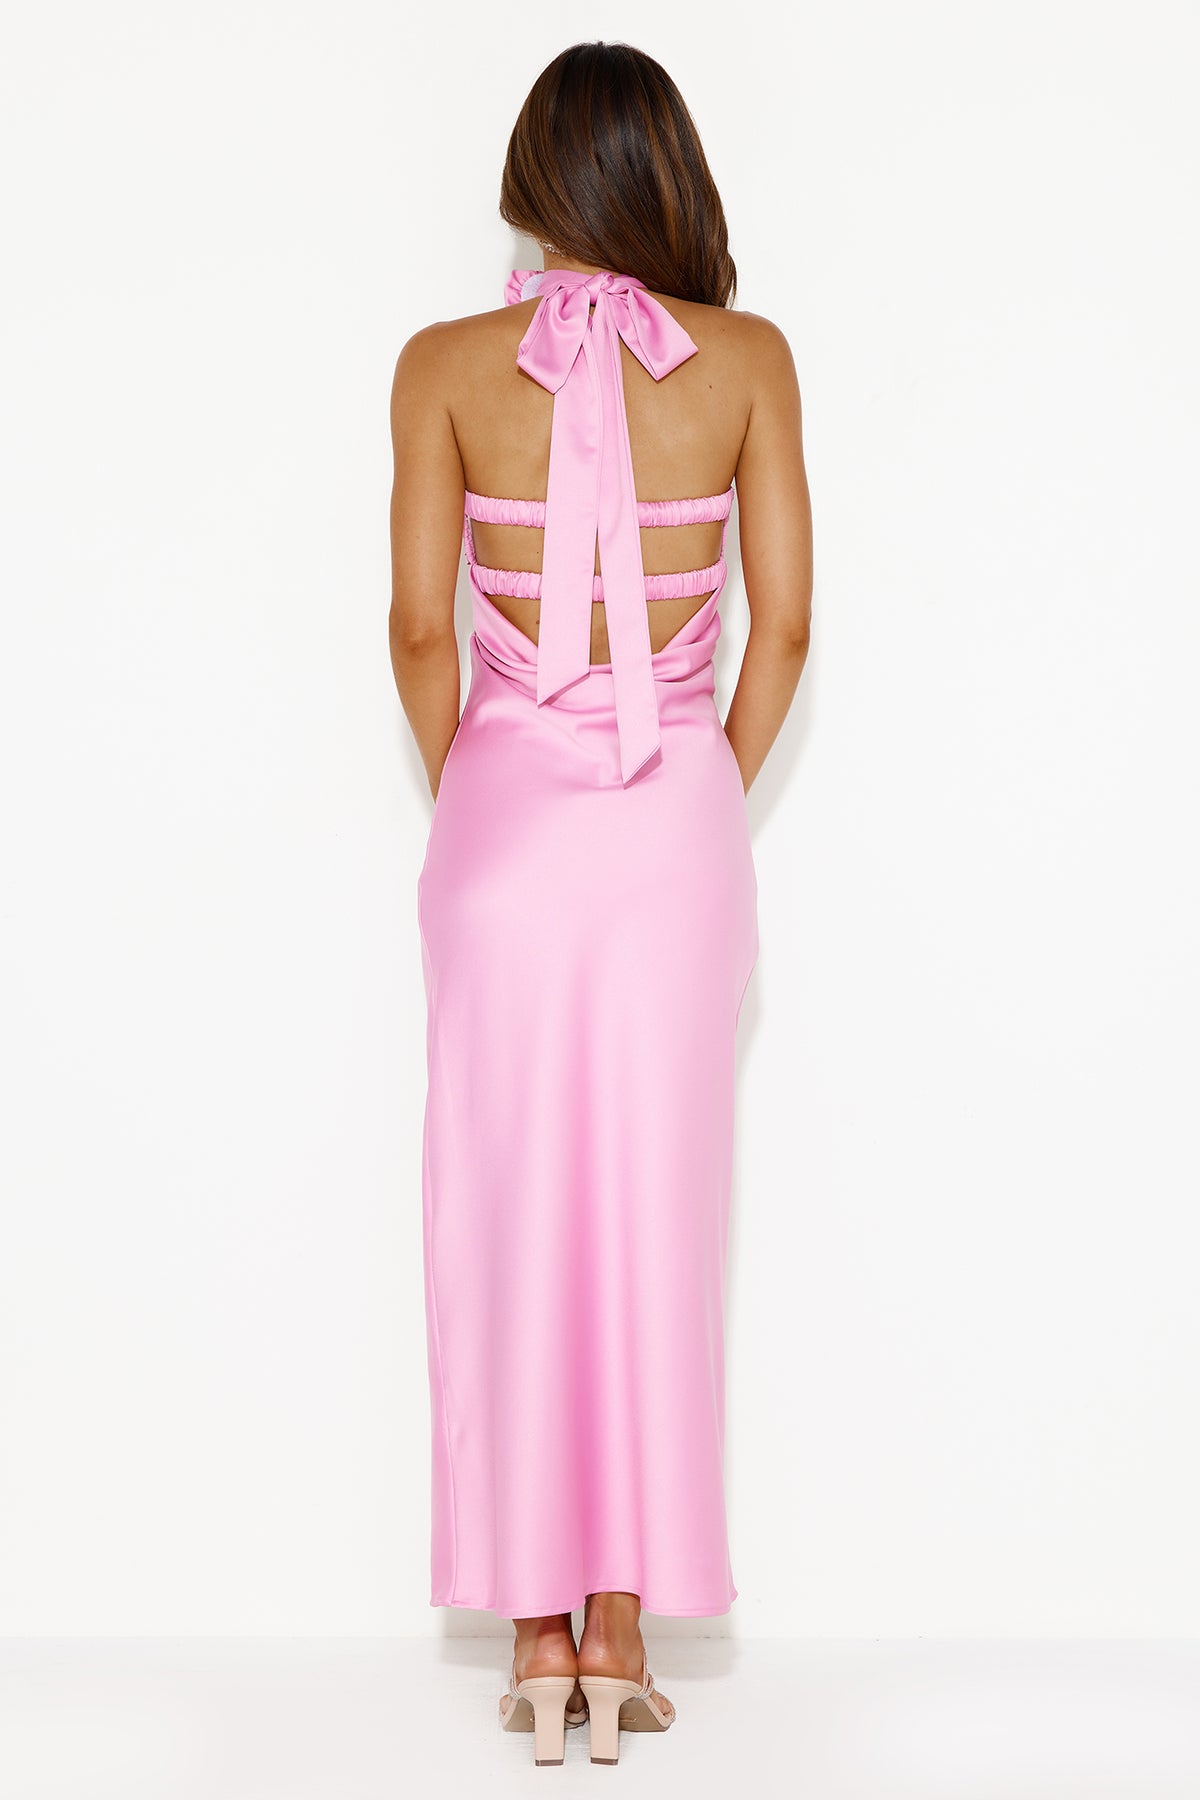 Shop Formal Dress - Forever Trend Strapless Satin Maxi Dress Pink fourth image